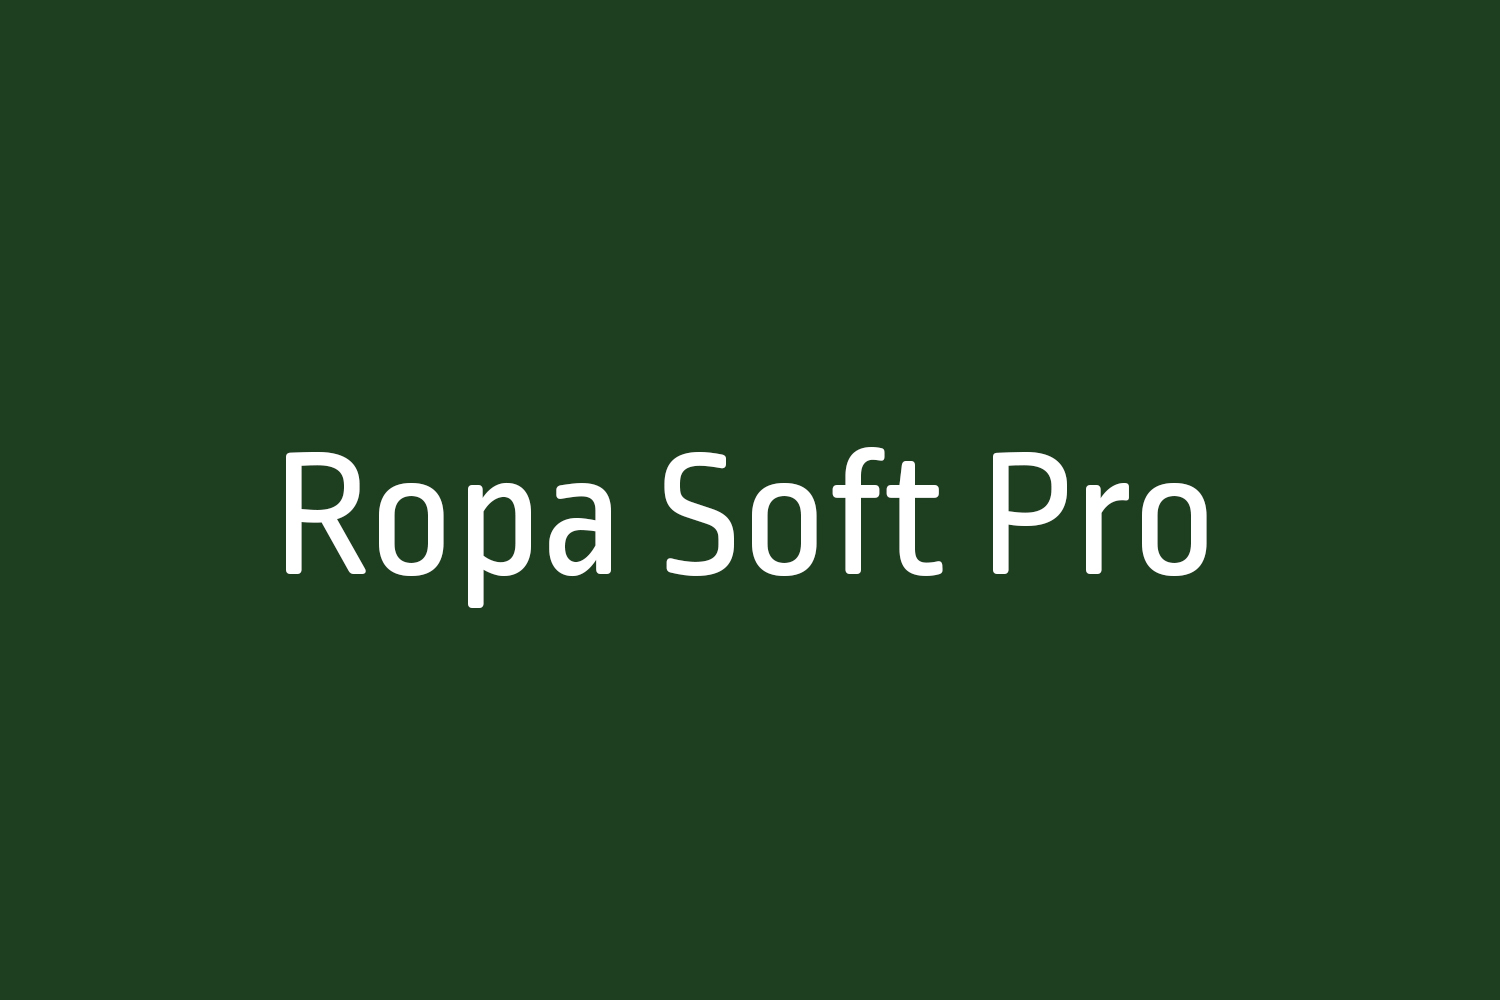 Ropa Soft Pro